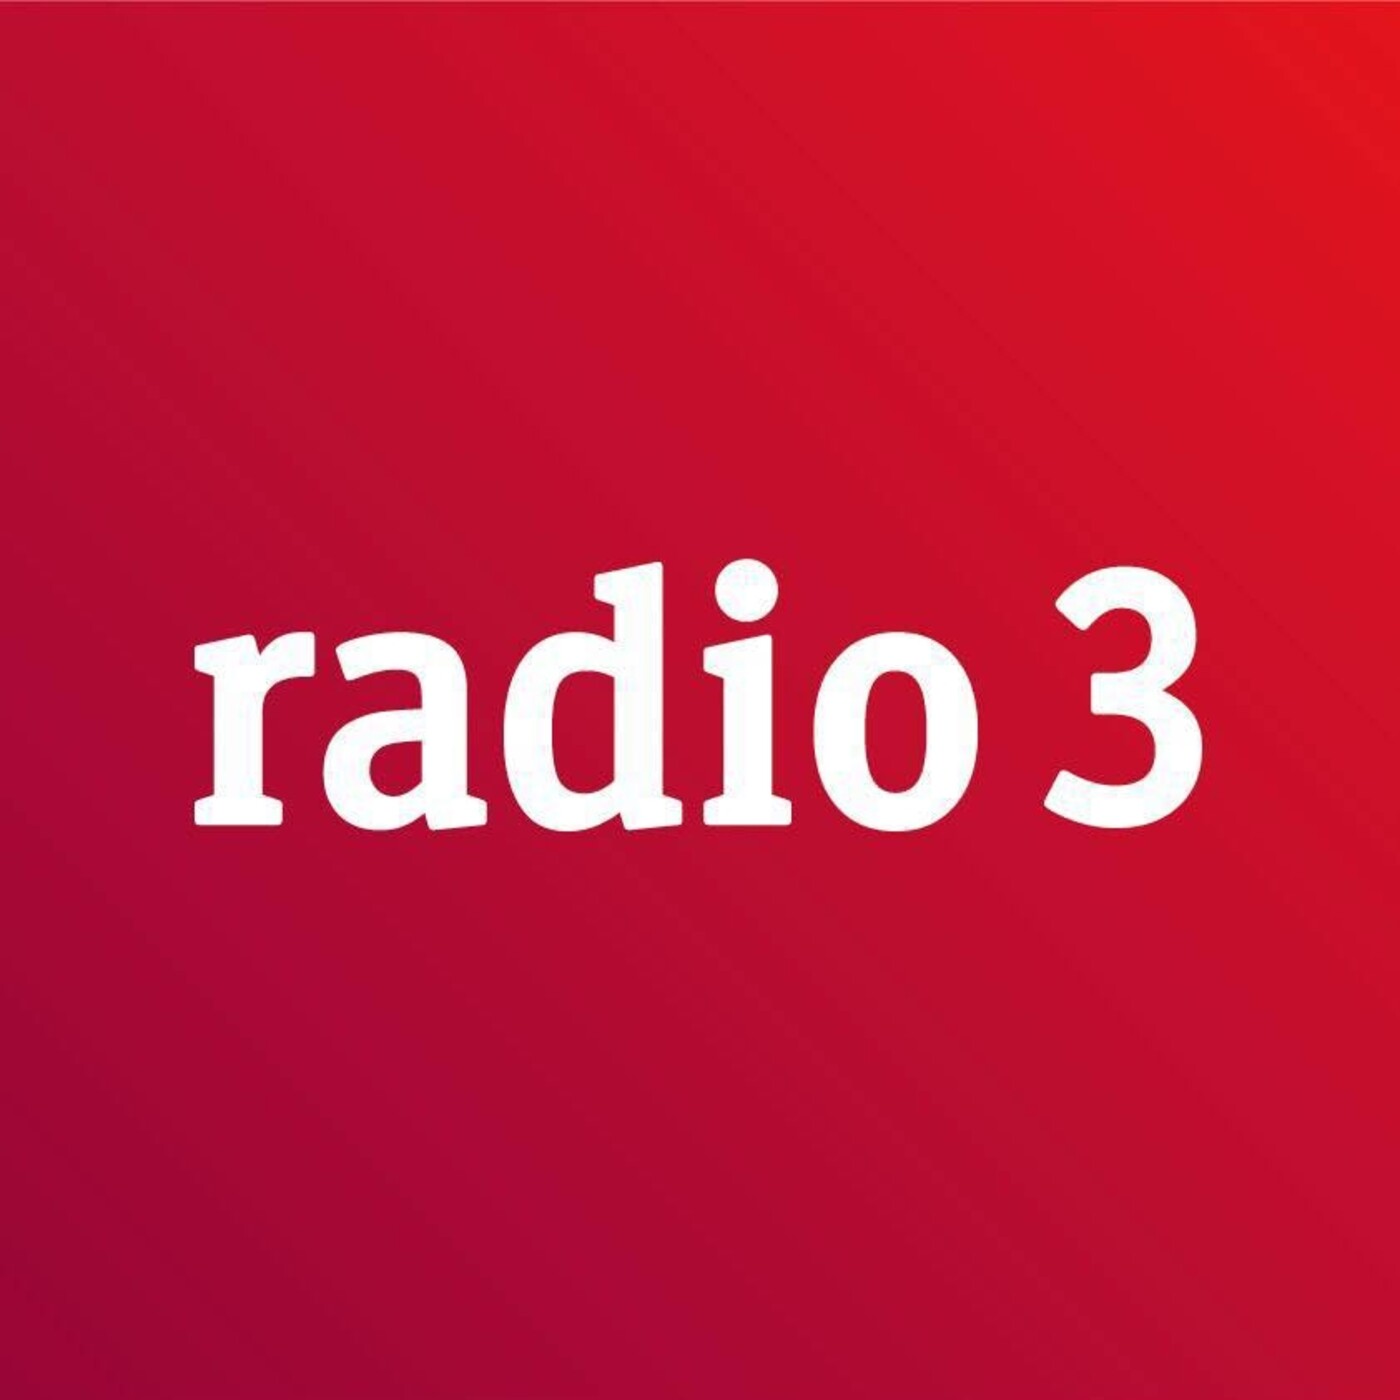 普罗菲洛 RNE Radio 3 卡纳勒电视